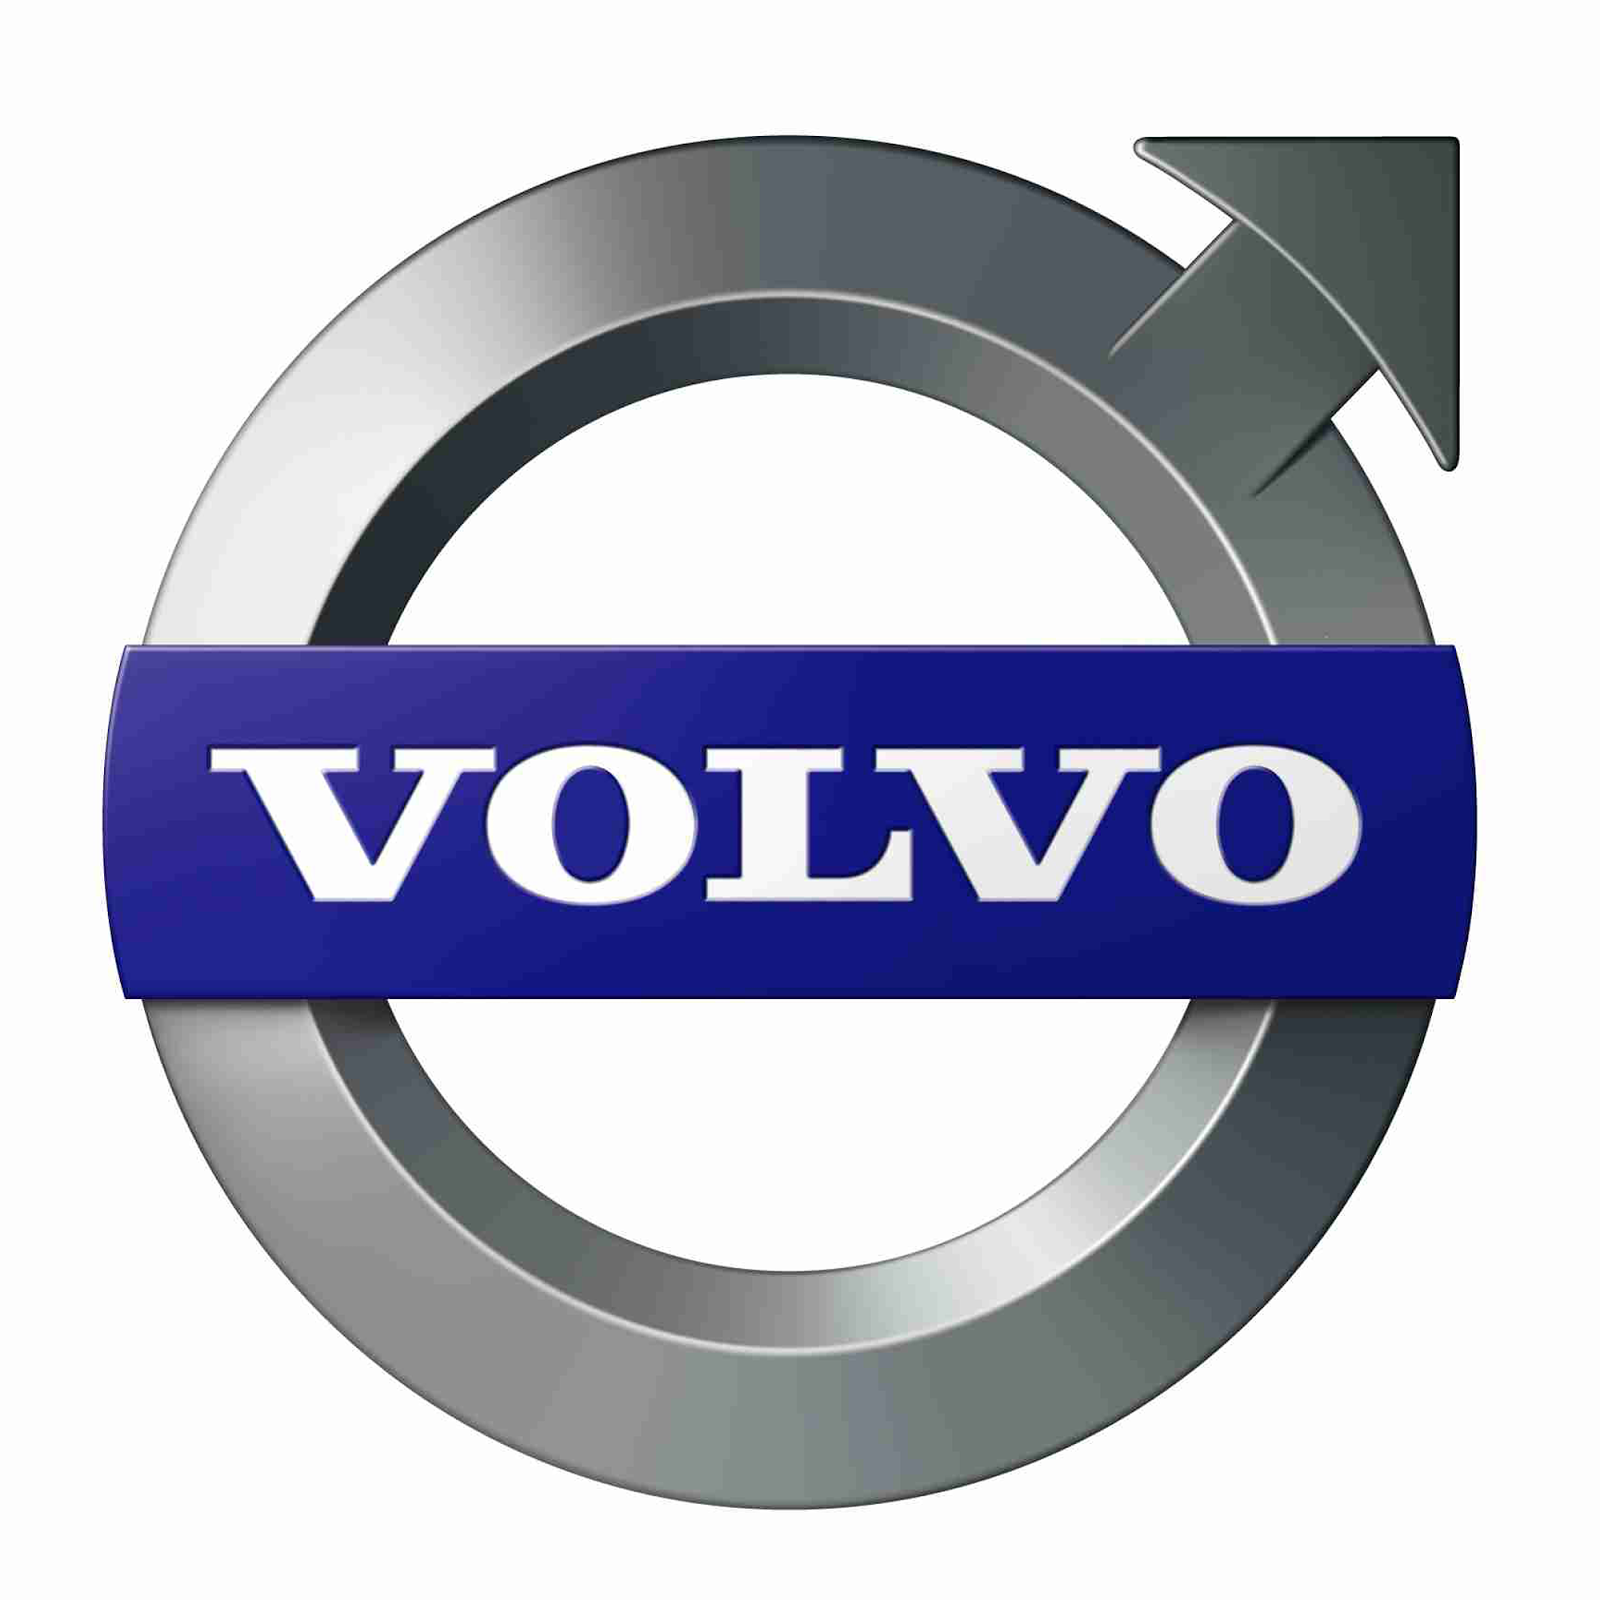 Volvo Cars logo.png